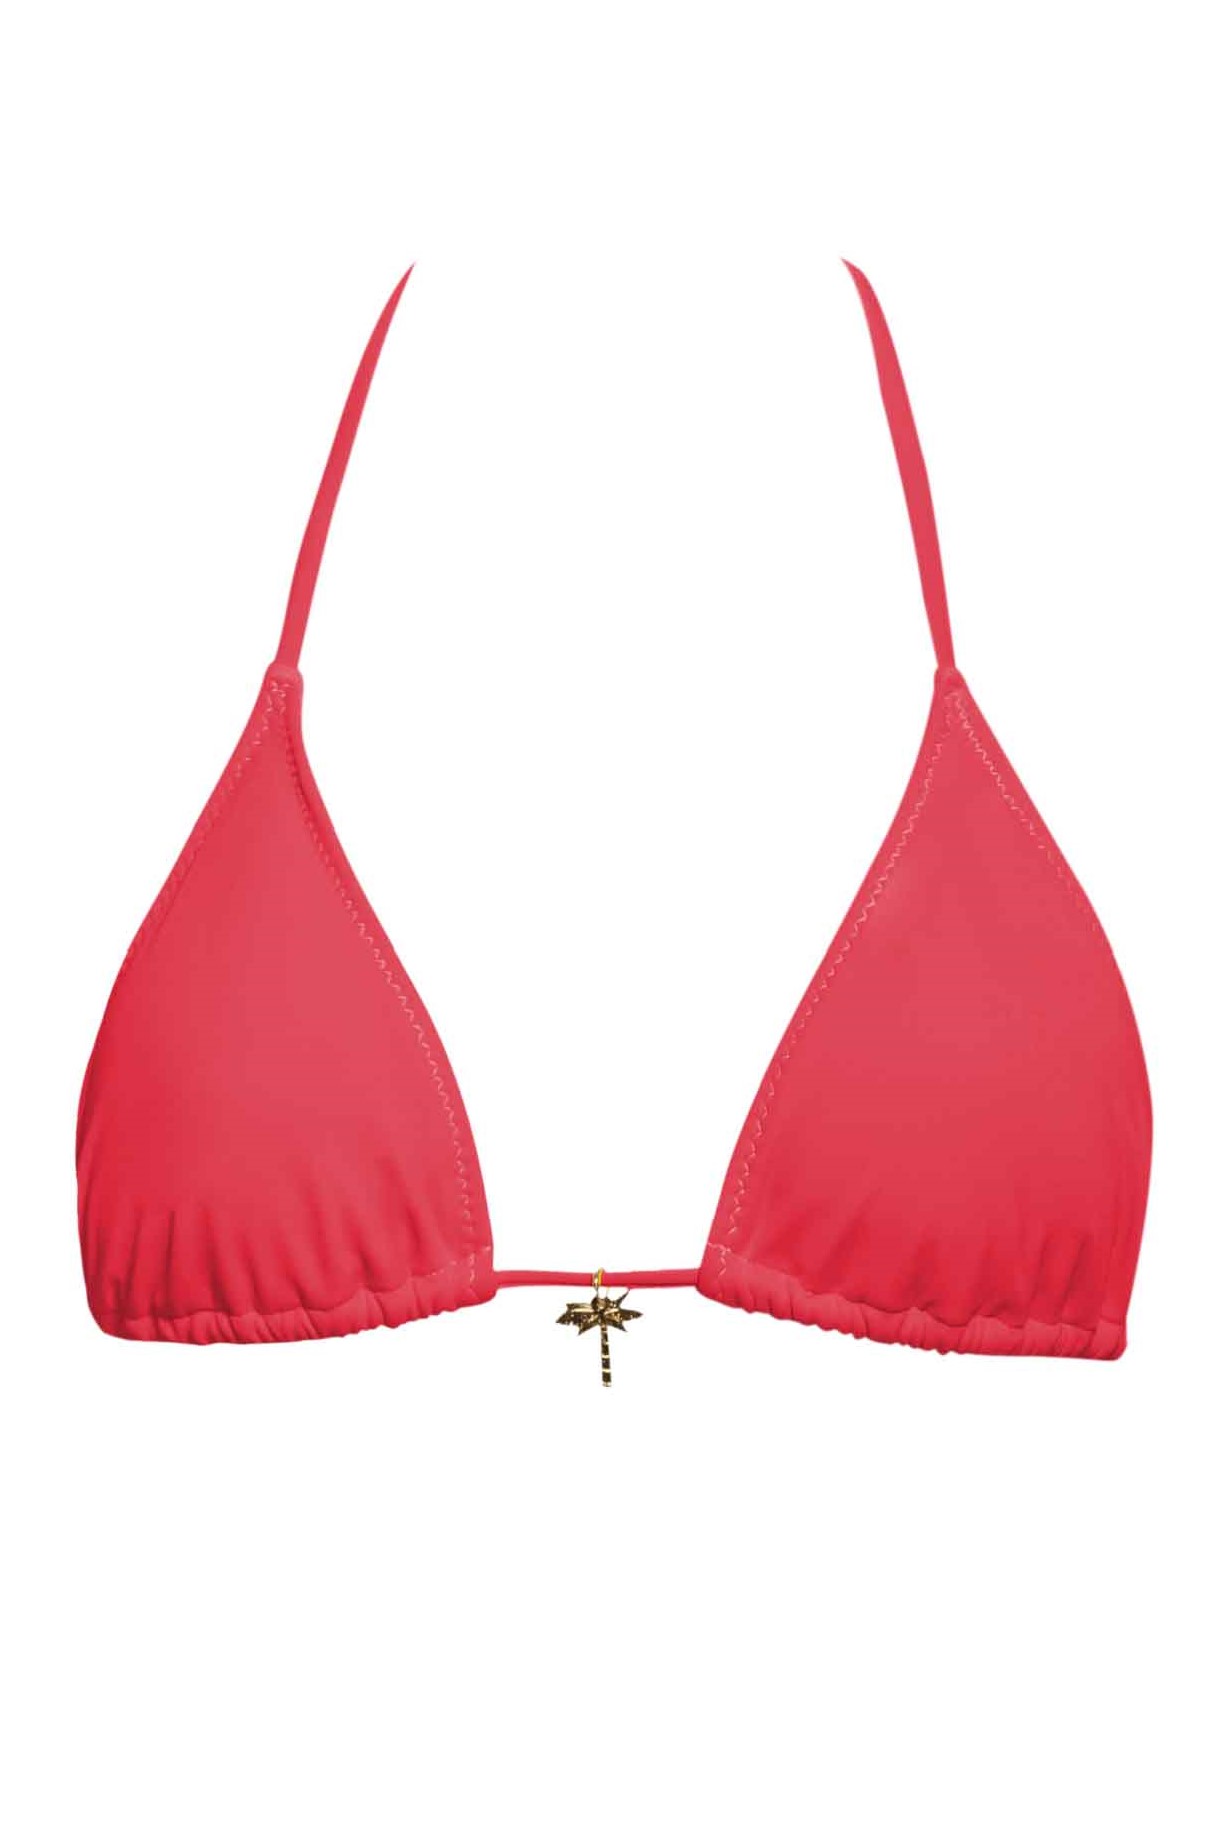 Phax Rode Triangel Bikini Top 